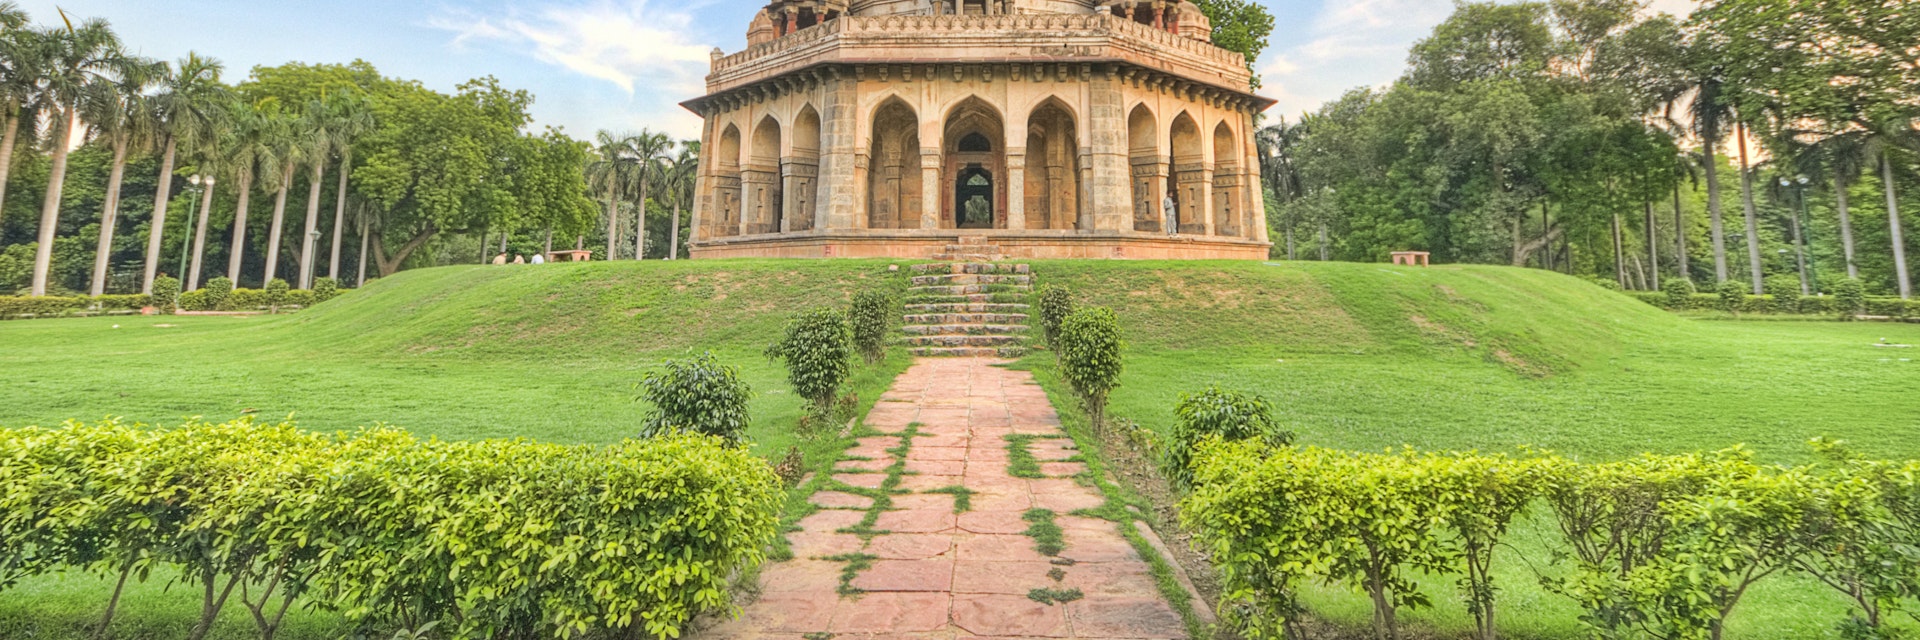 Mohammed Shah's Tomb at Lodi Gardens, New Delhi